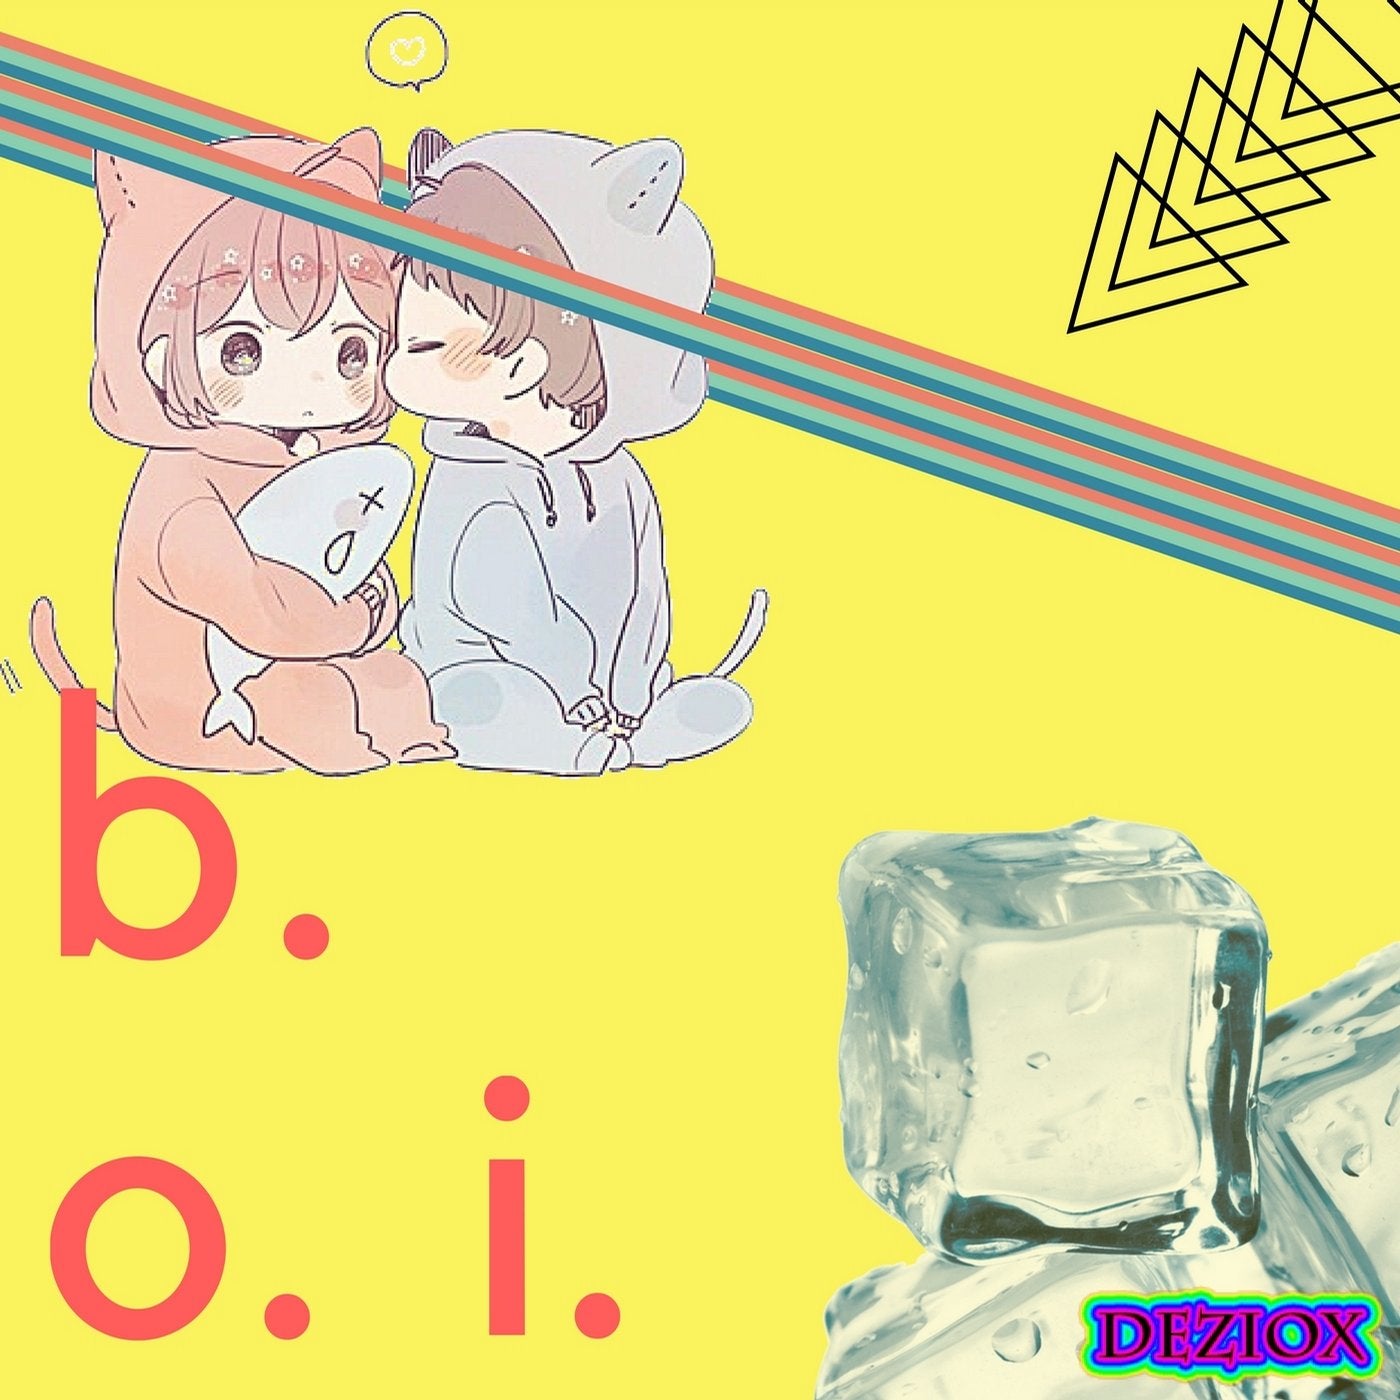 b o i (bass on ice)